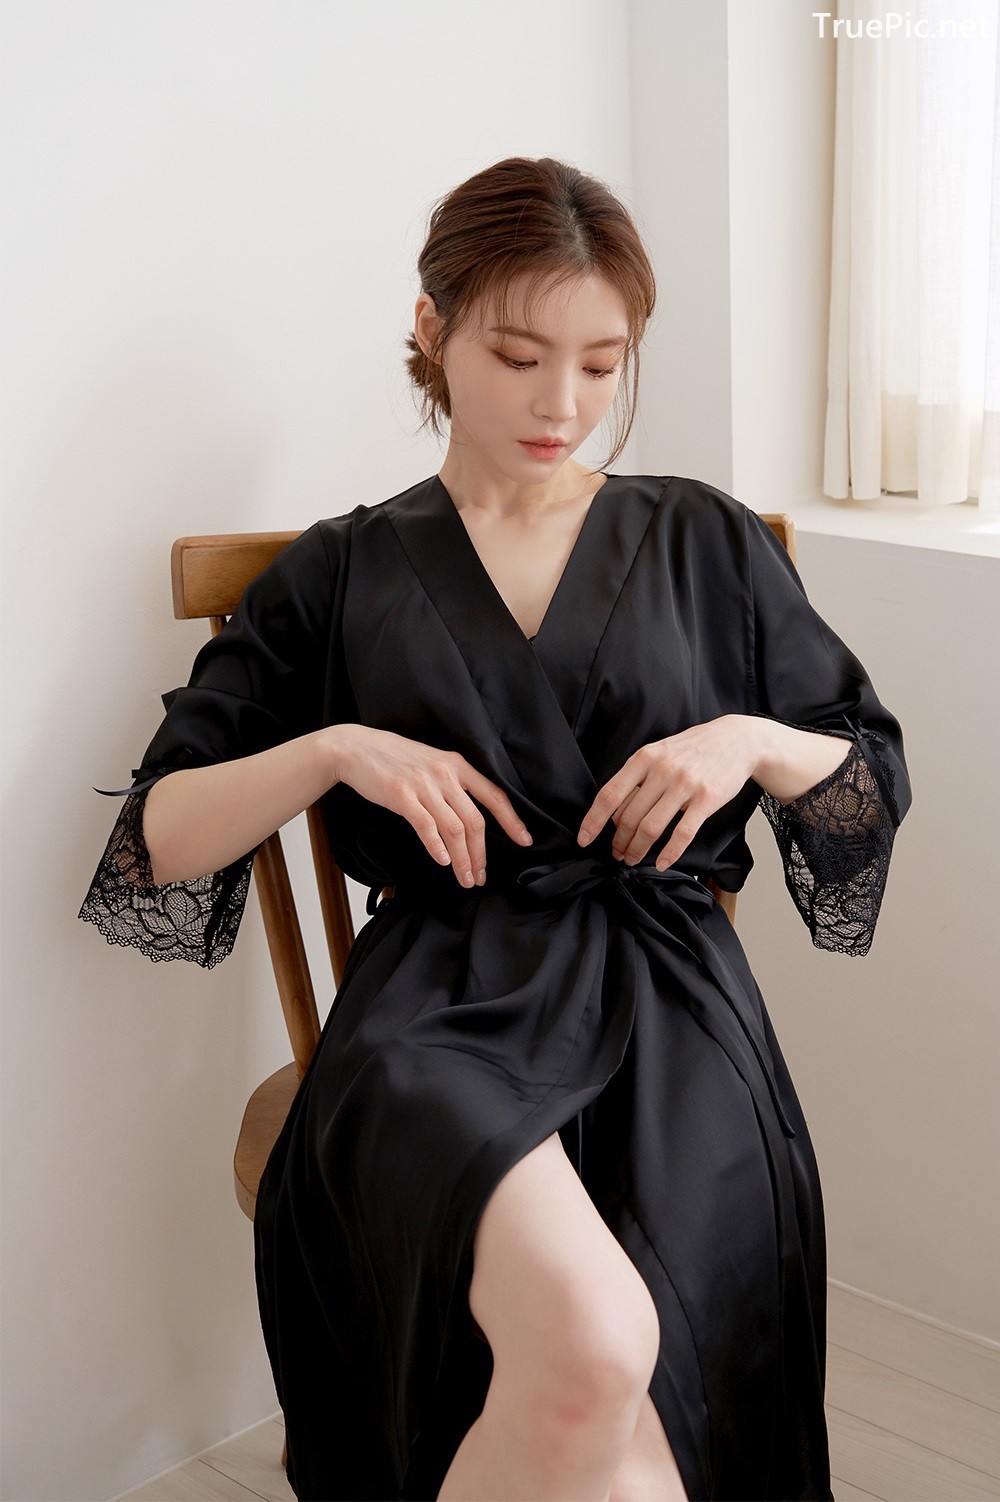 Image Korean Fashion Model Lee Ho Sin - Lingerie Wedding Pure - TruePic.net - Picture-80